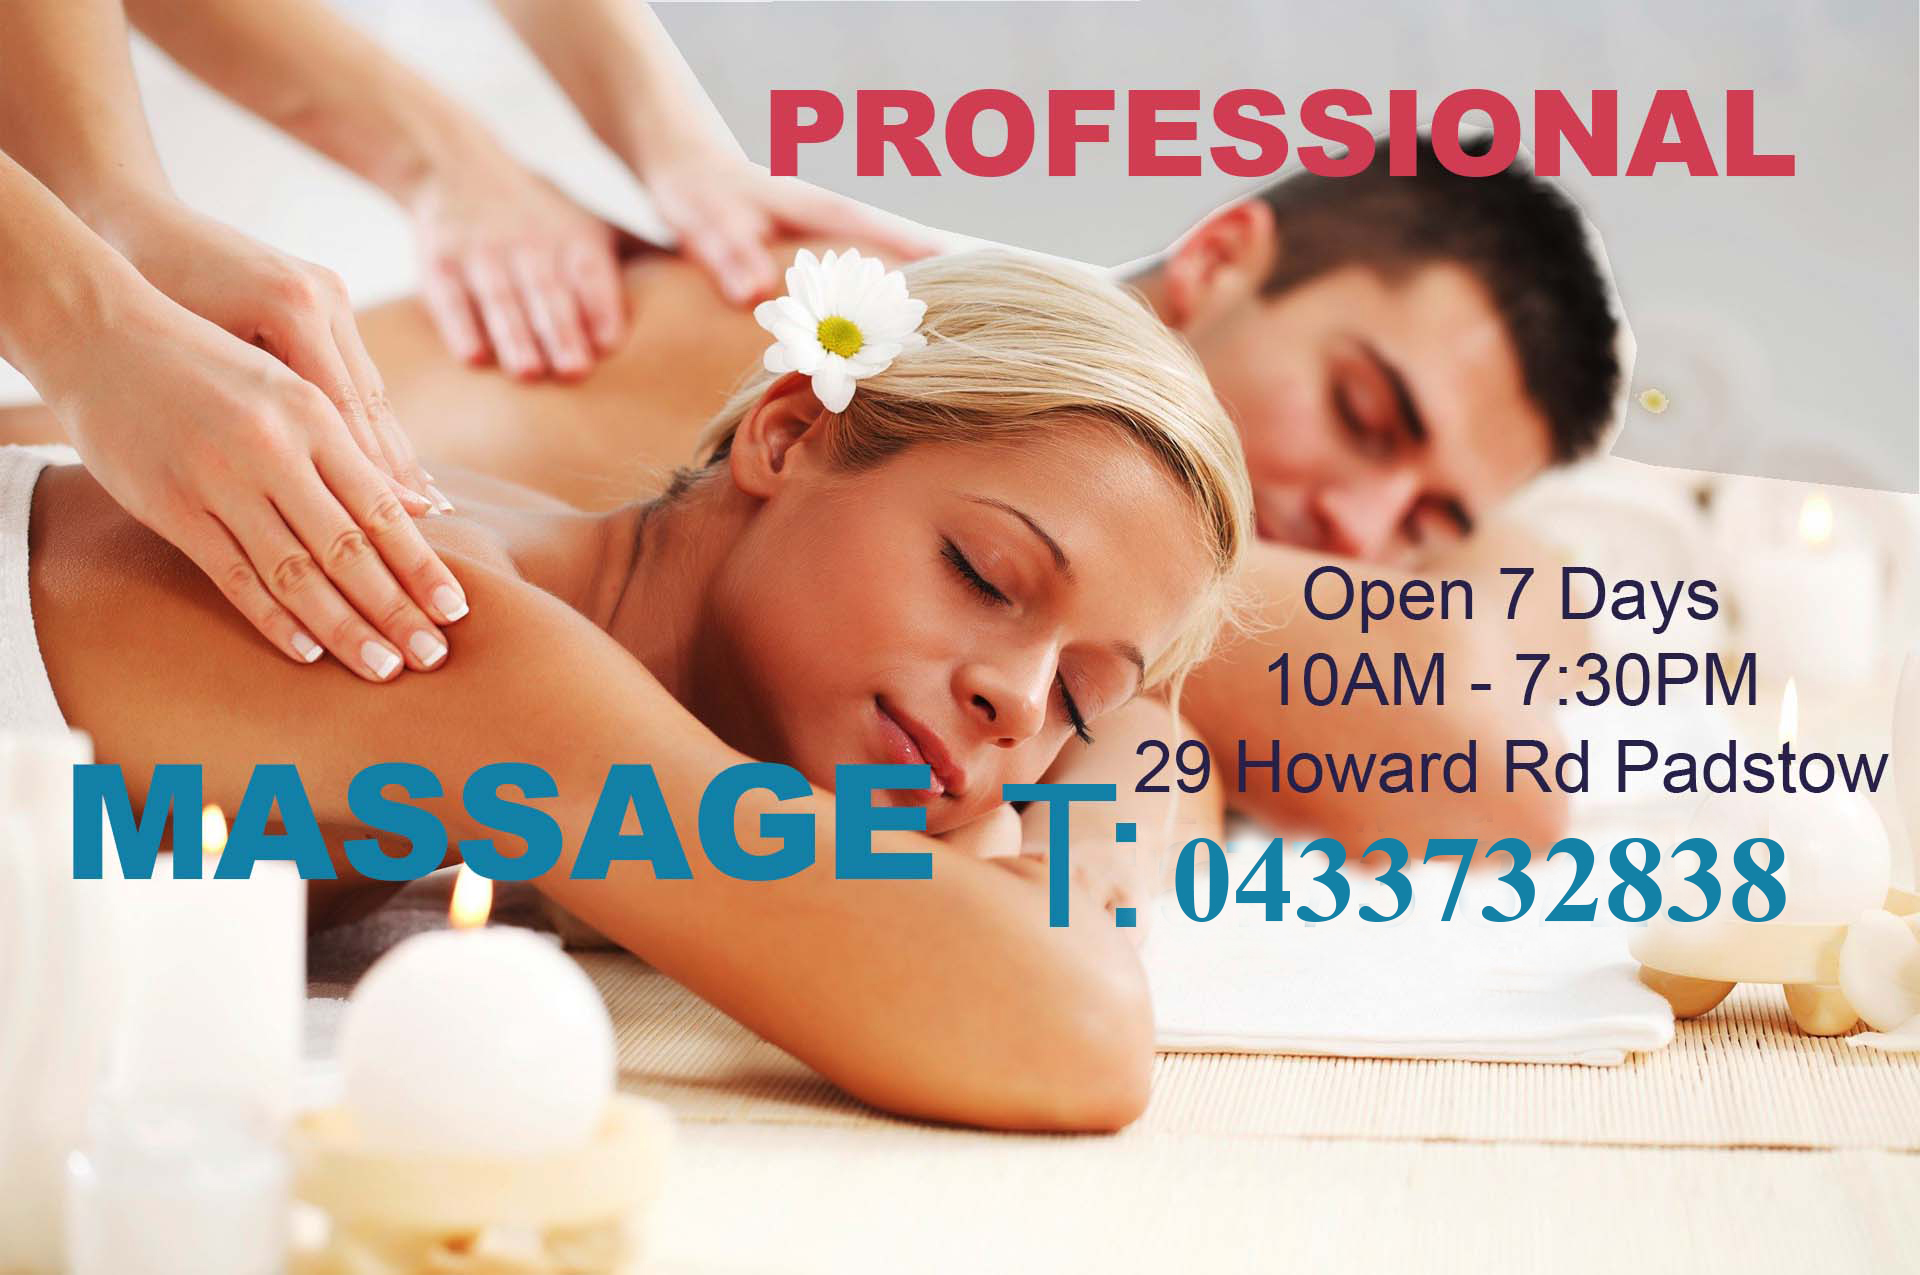 Padstow Massage, Professional Massage Padstow